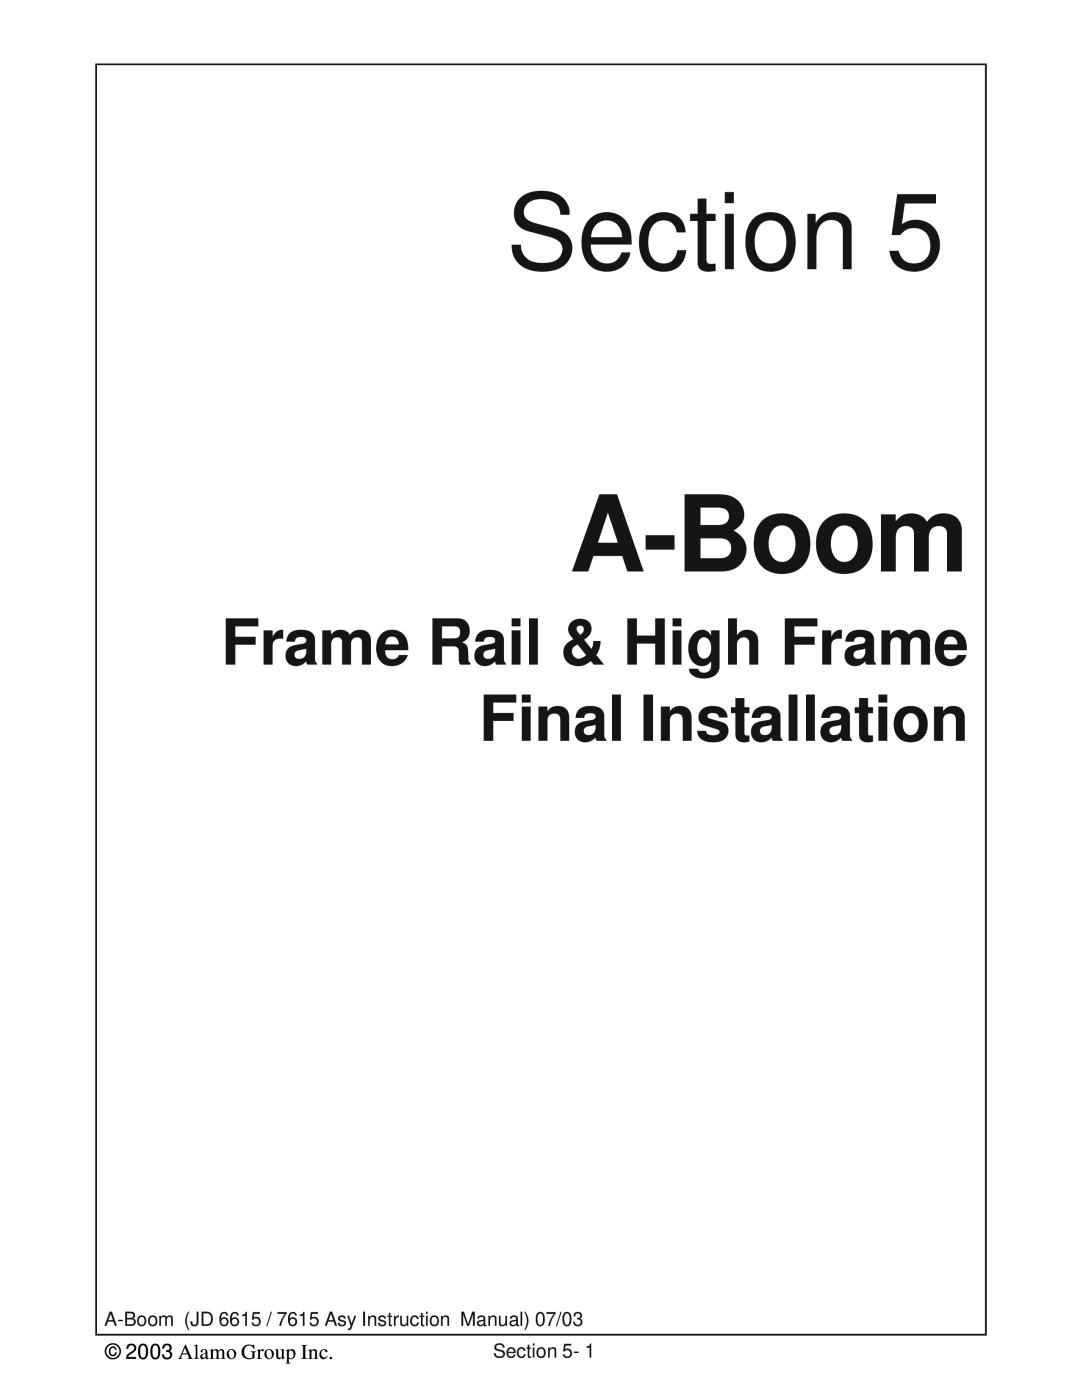 Alamo DSEB-D16/SAS instruction manual Frame Rail & High Frame Final Installation, Section, A-Boom, Alamo Group Inc 